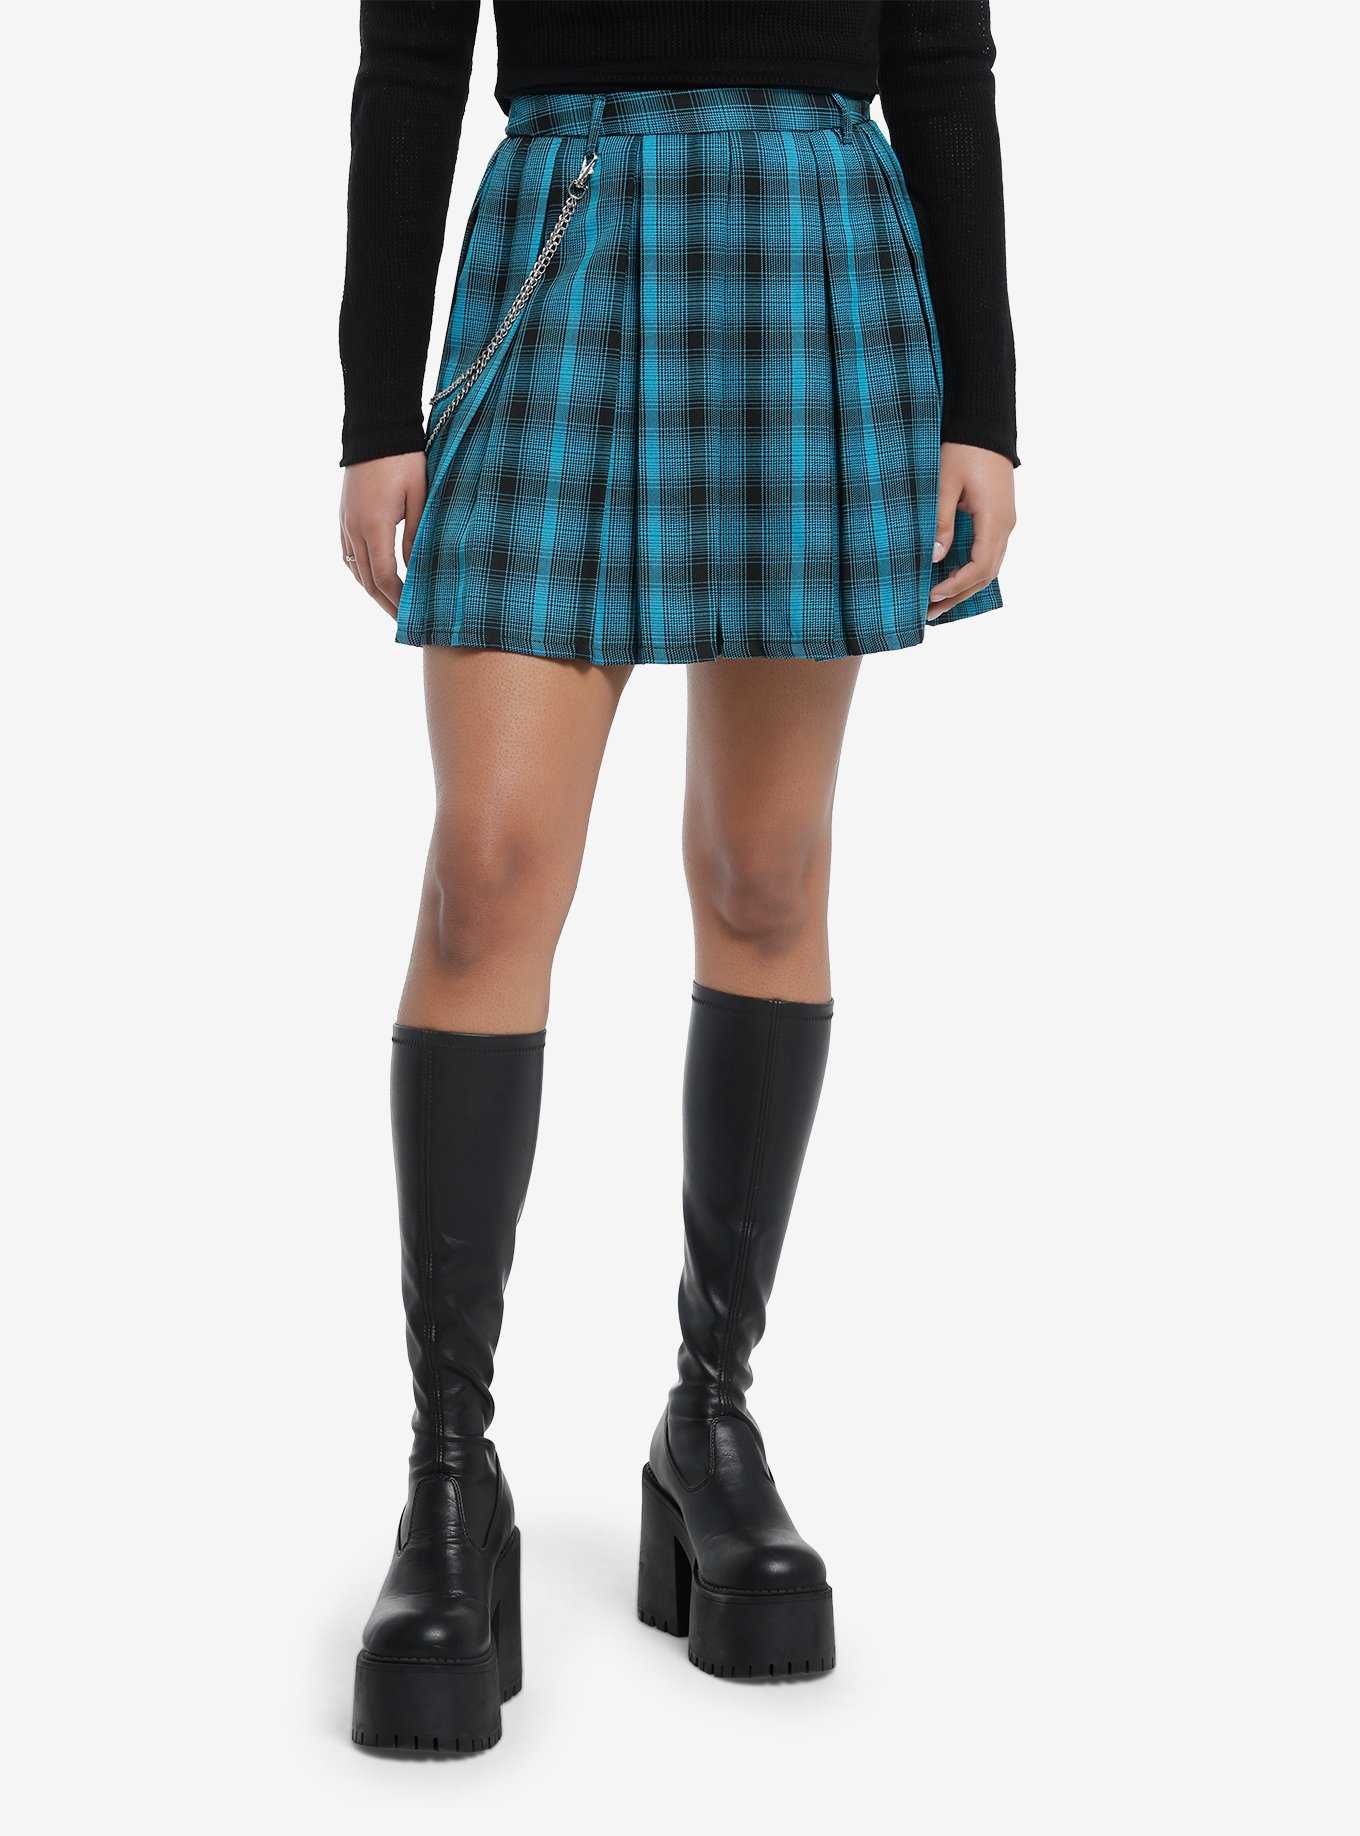 Girls Sailor Scotland Plaid Checks School Uniform Pleated Skirt